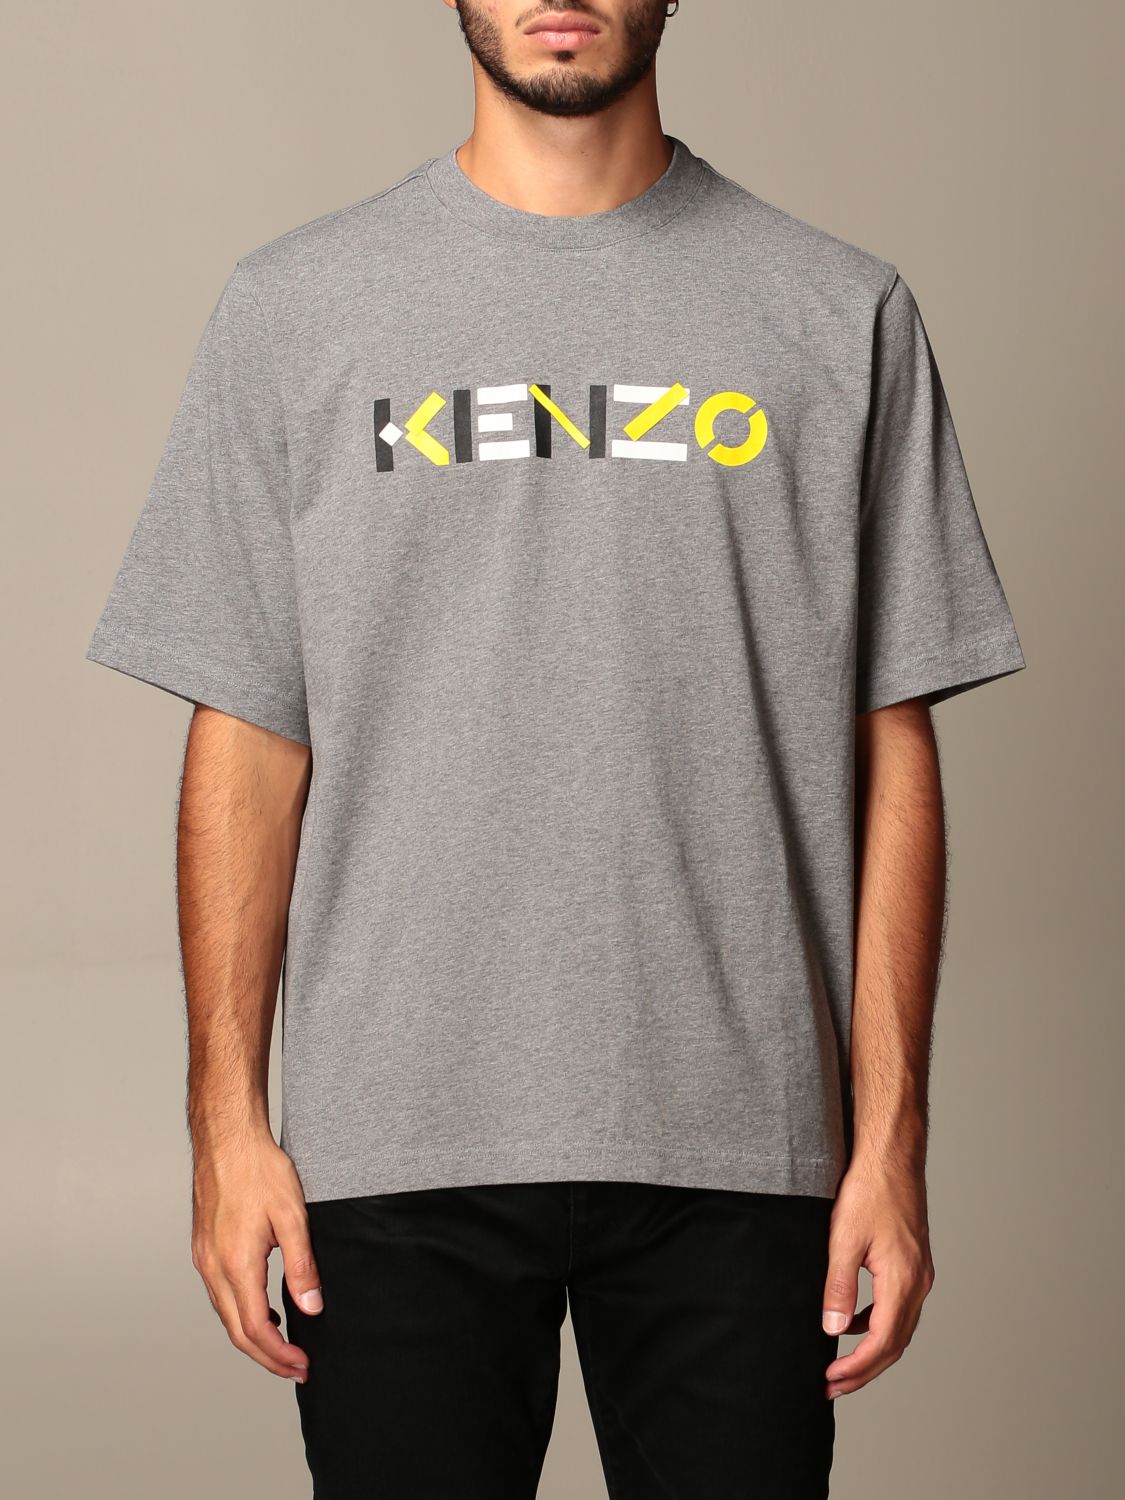 kenzo grey shirt